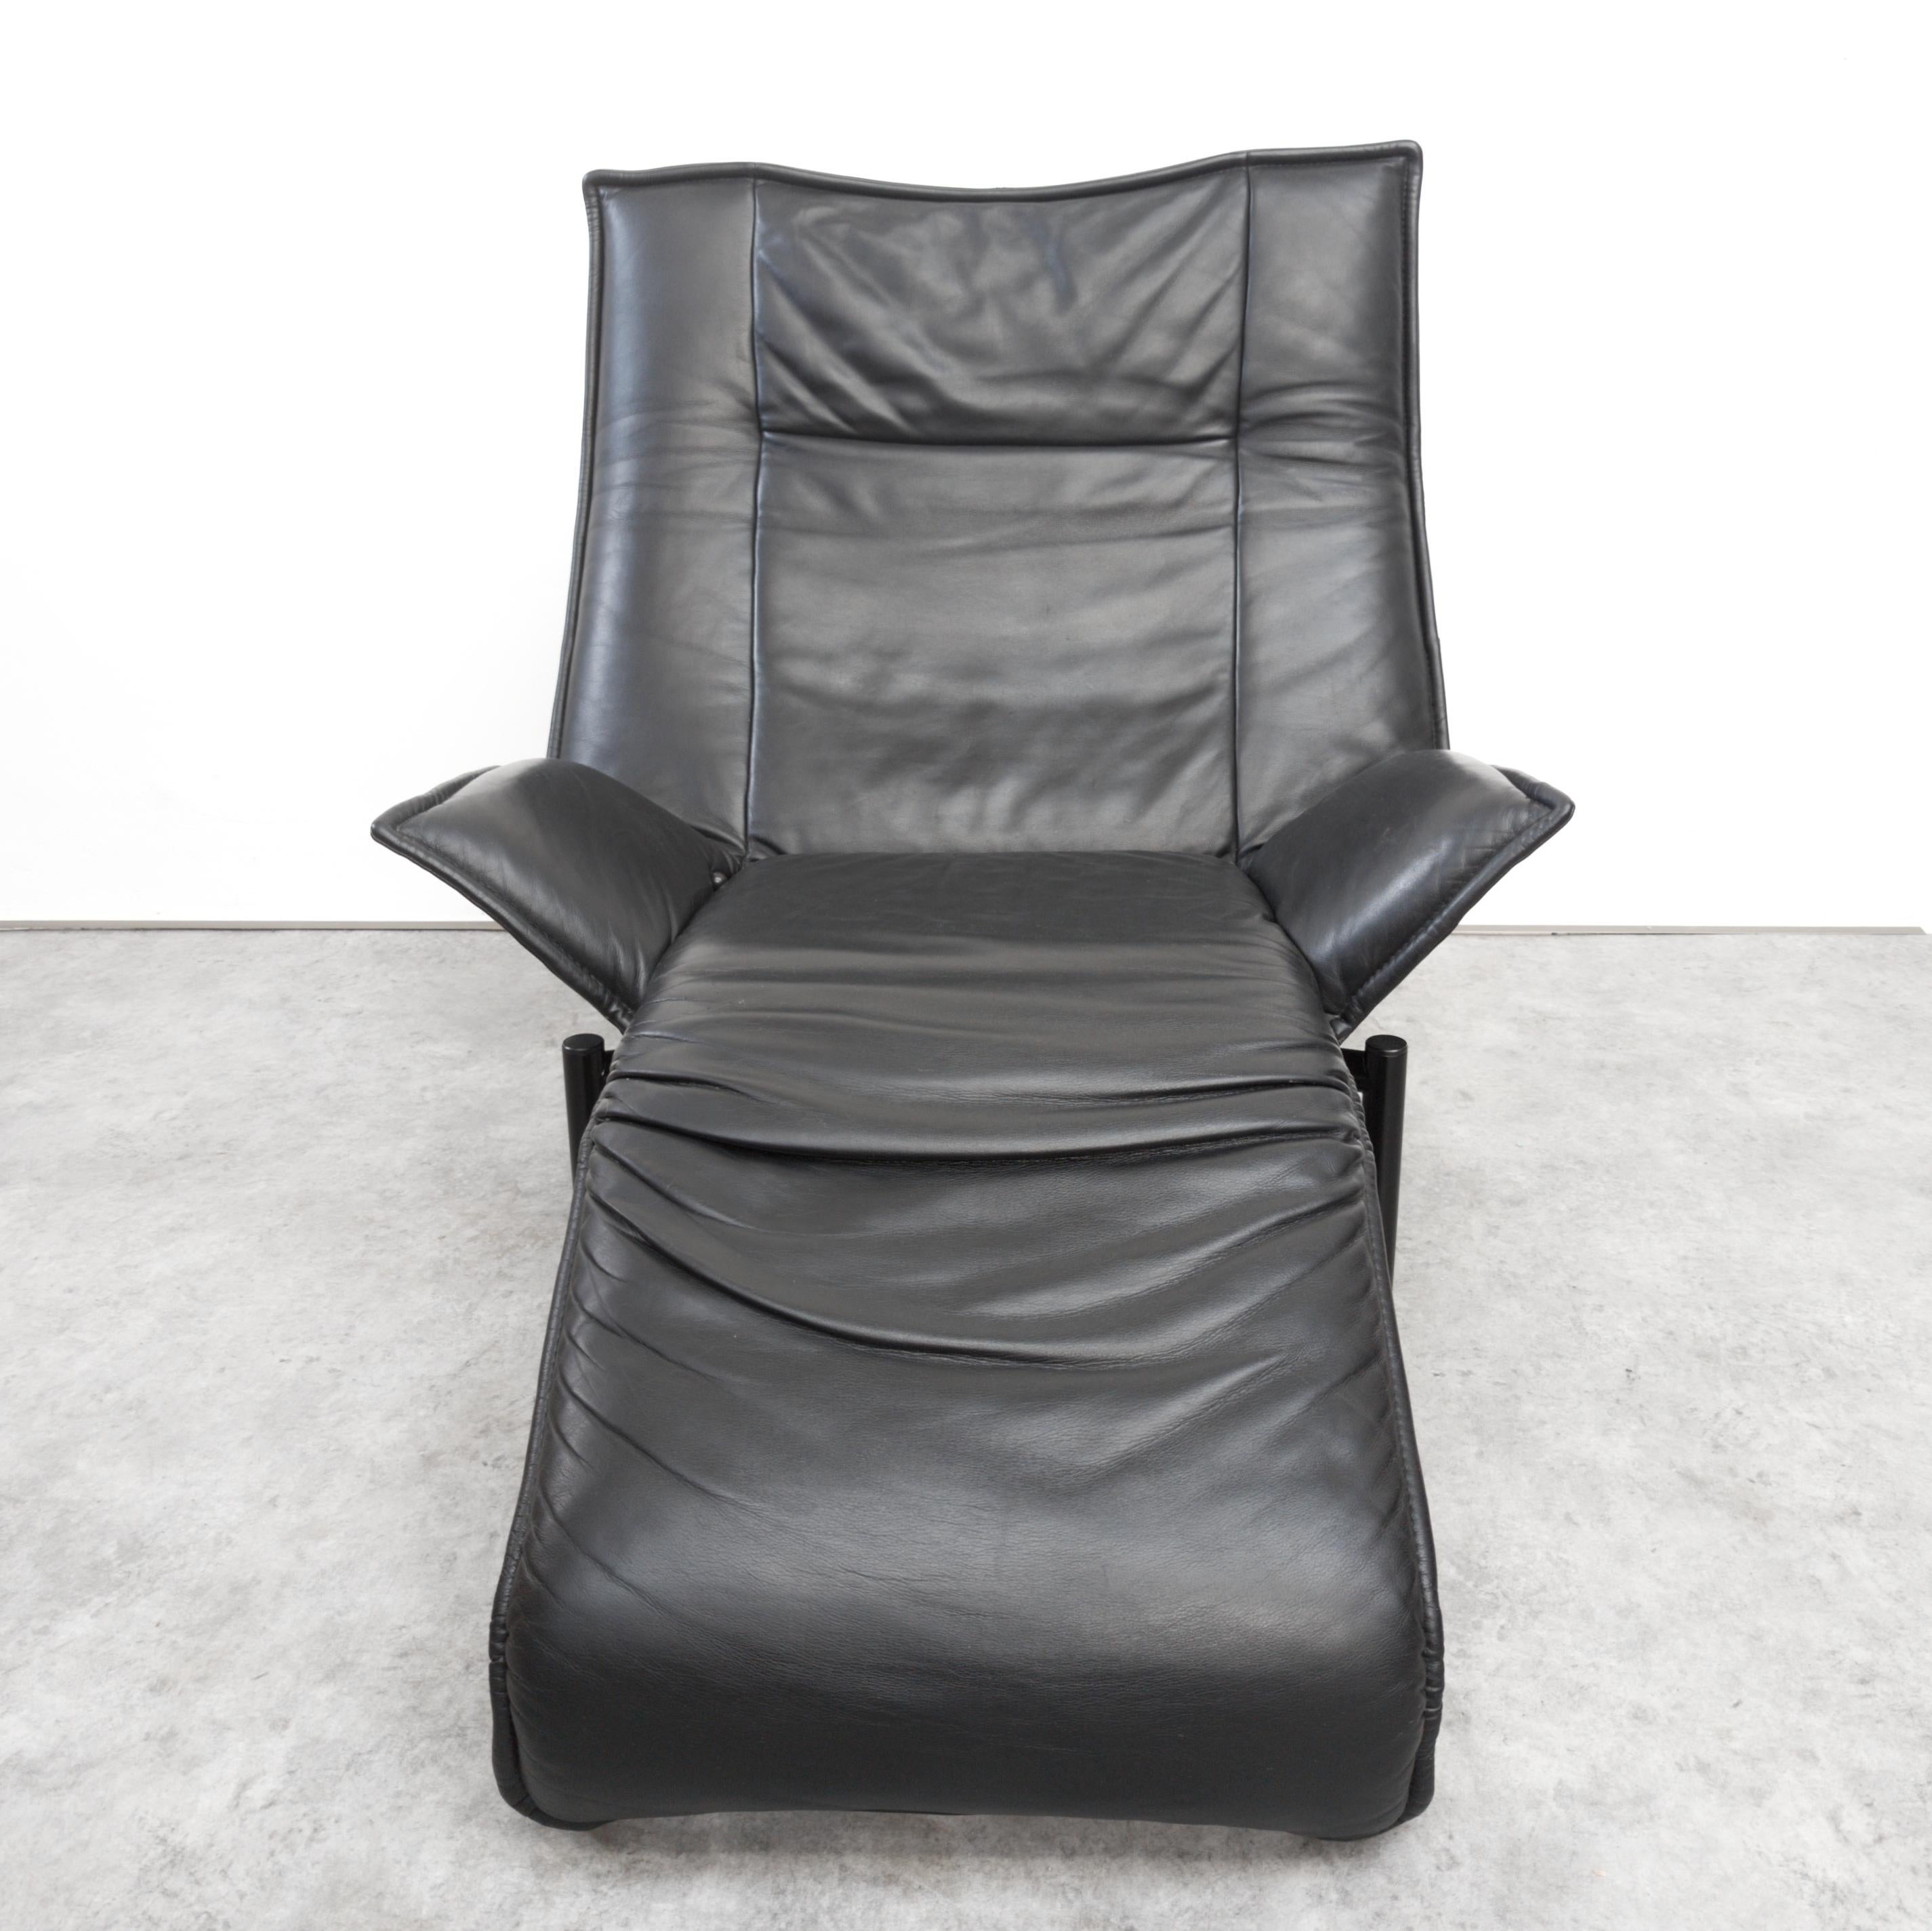 Late 20th Century Veranda Adjustable Lounge Chair by Vico Magistretti for Cassina